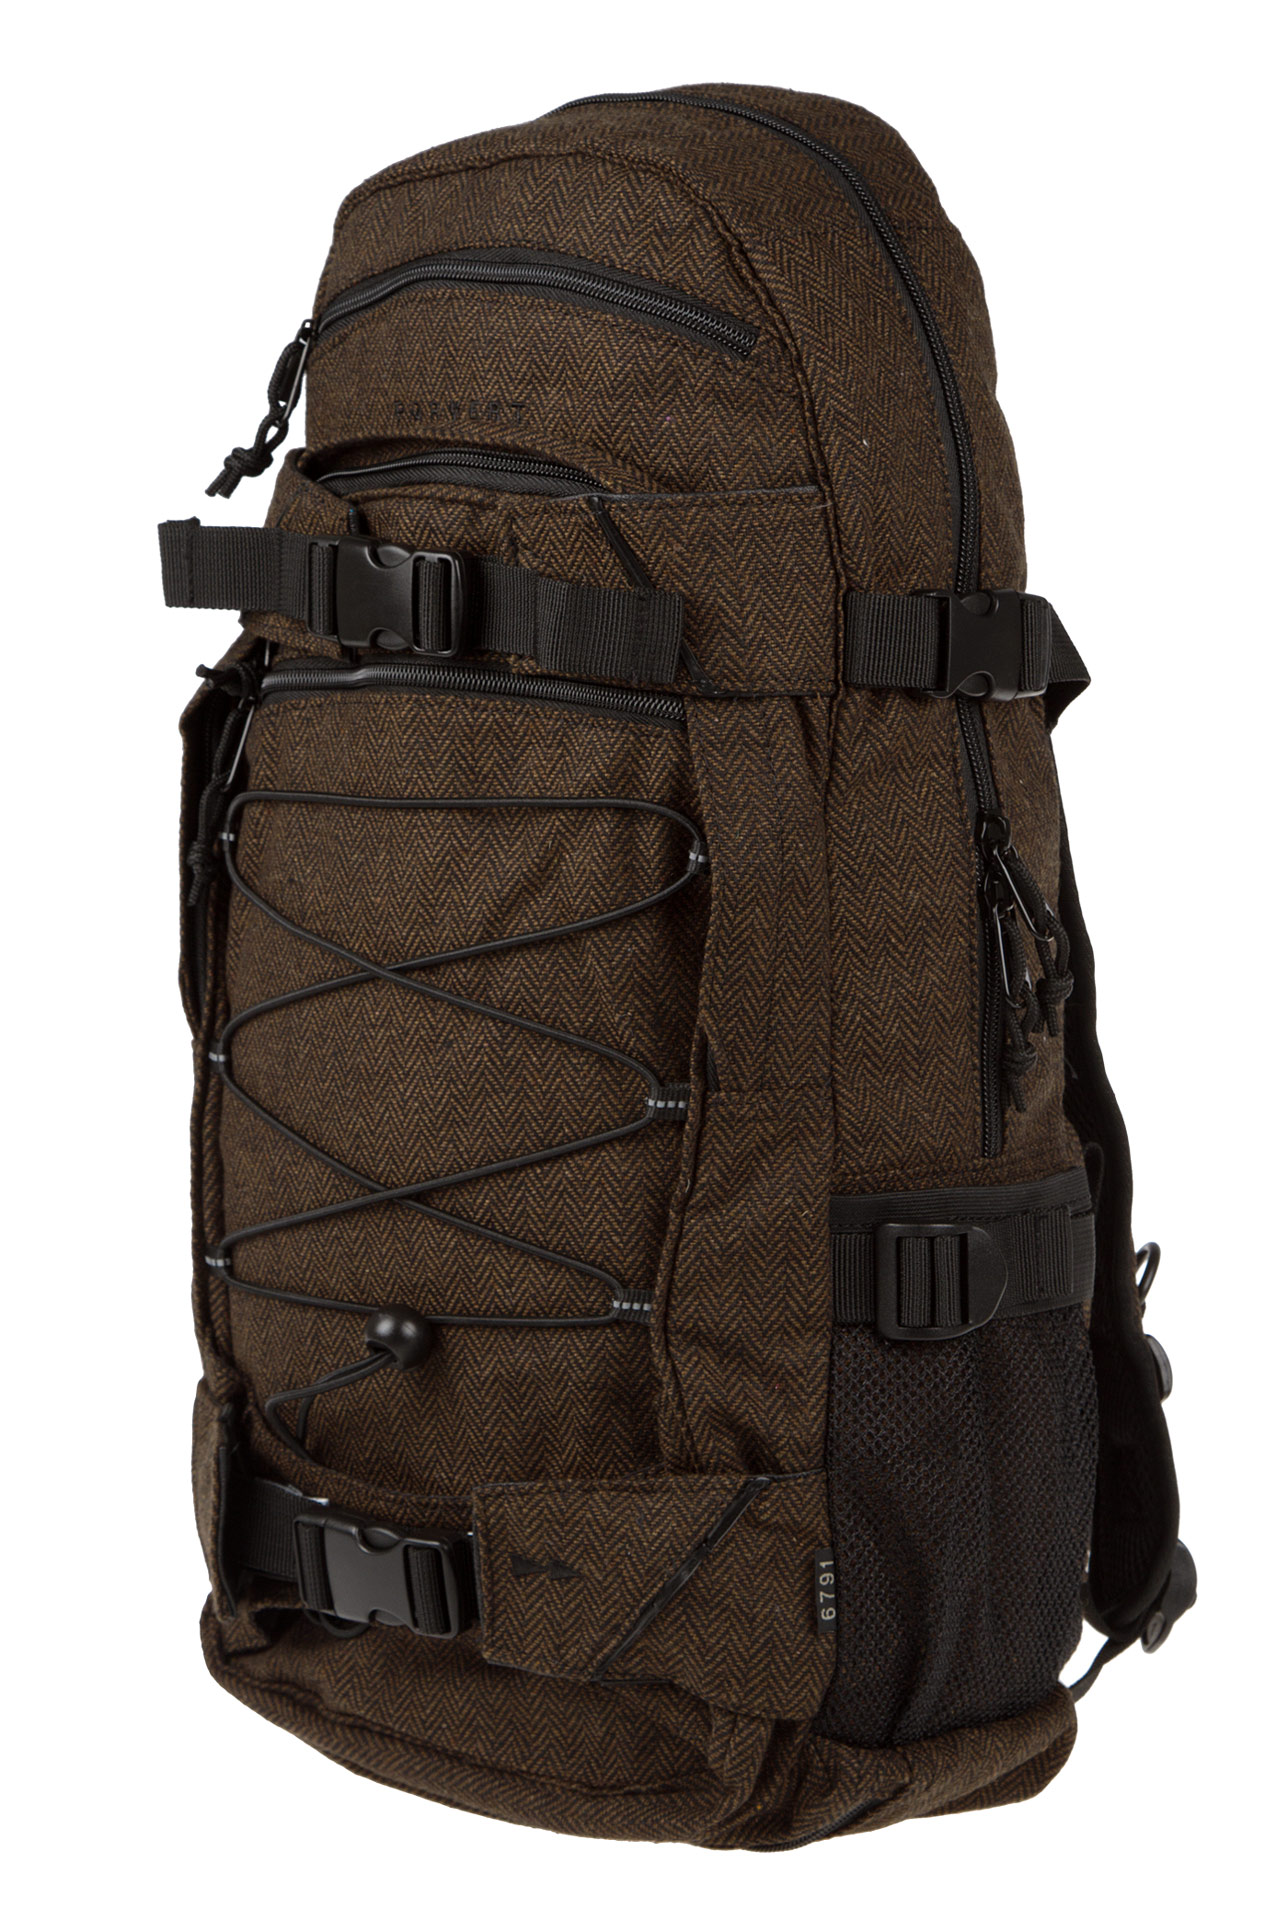 Forvert New Louis Backpack 20L (flannel brown) buy at skatedeluxe